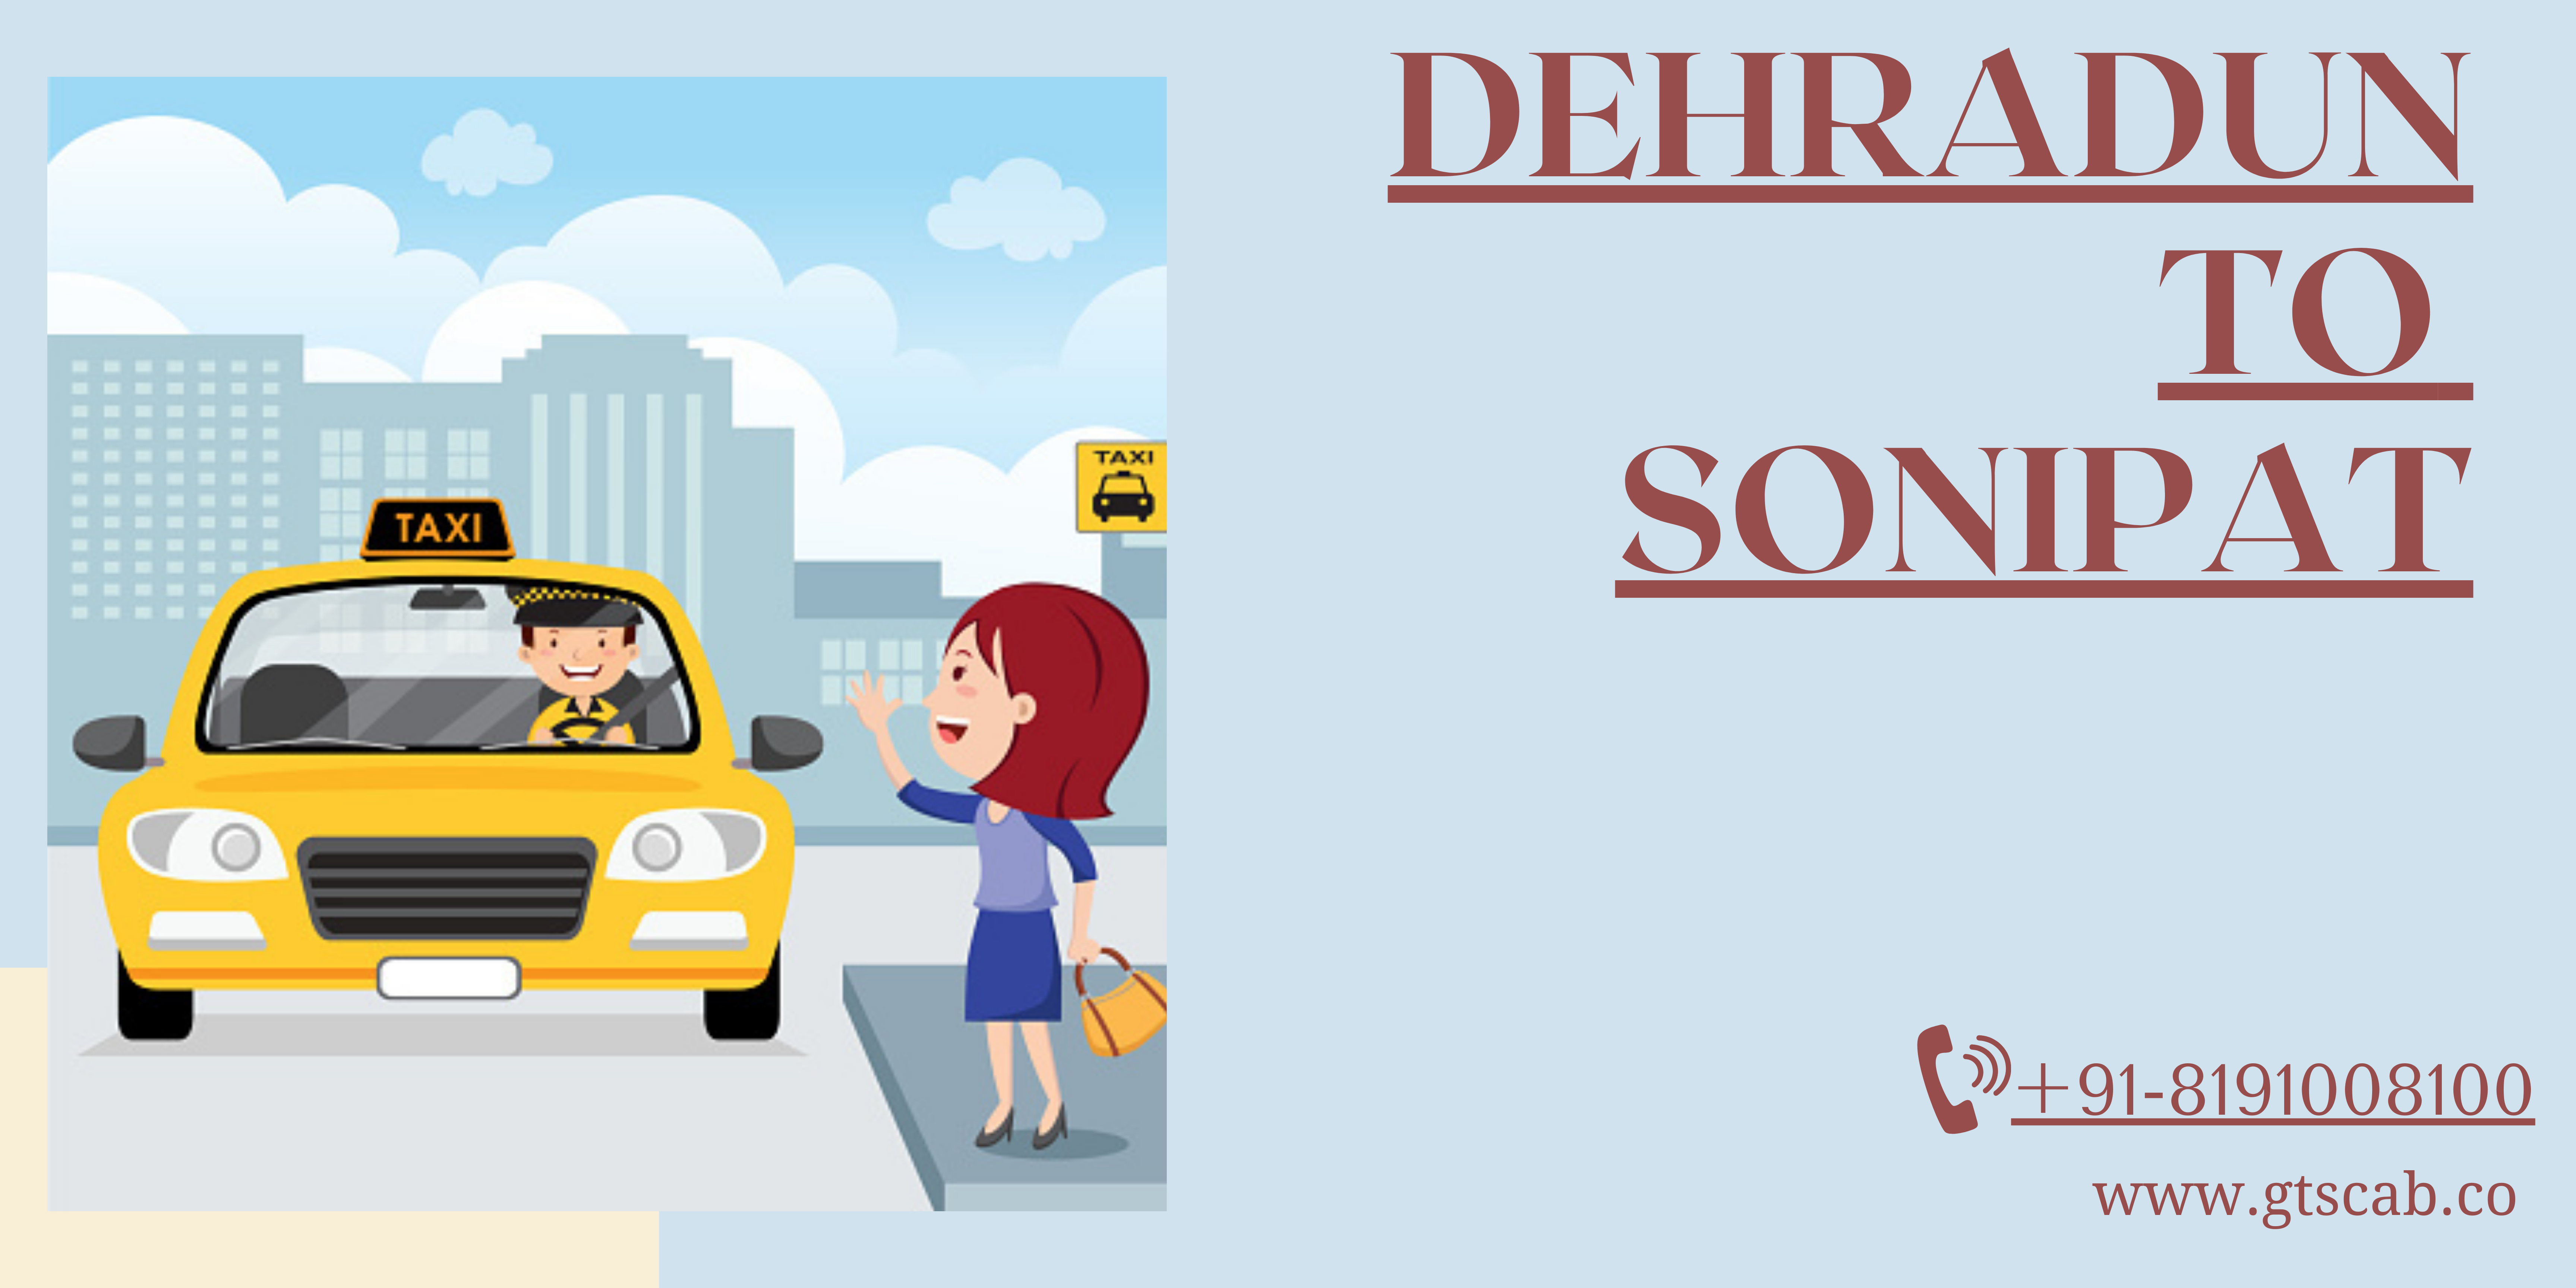 Dehradun To Sonipat Cab Service +918191008100 Upto 25% off Us Gts Cab